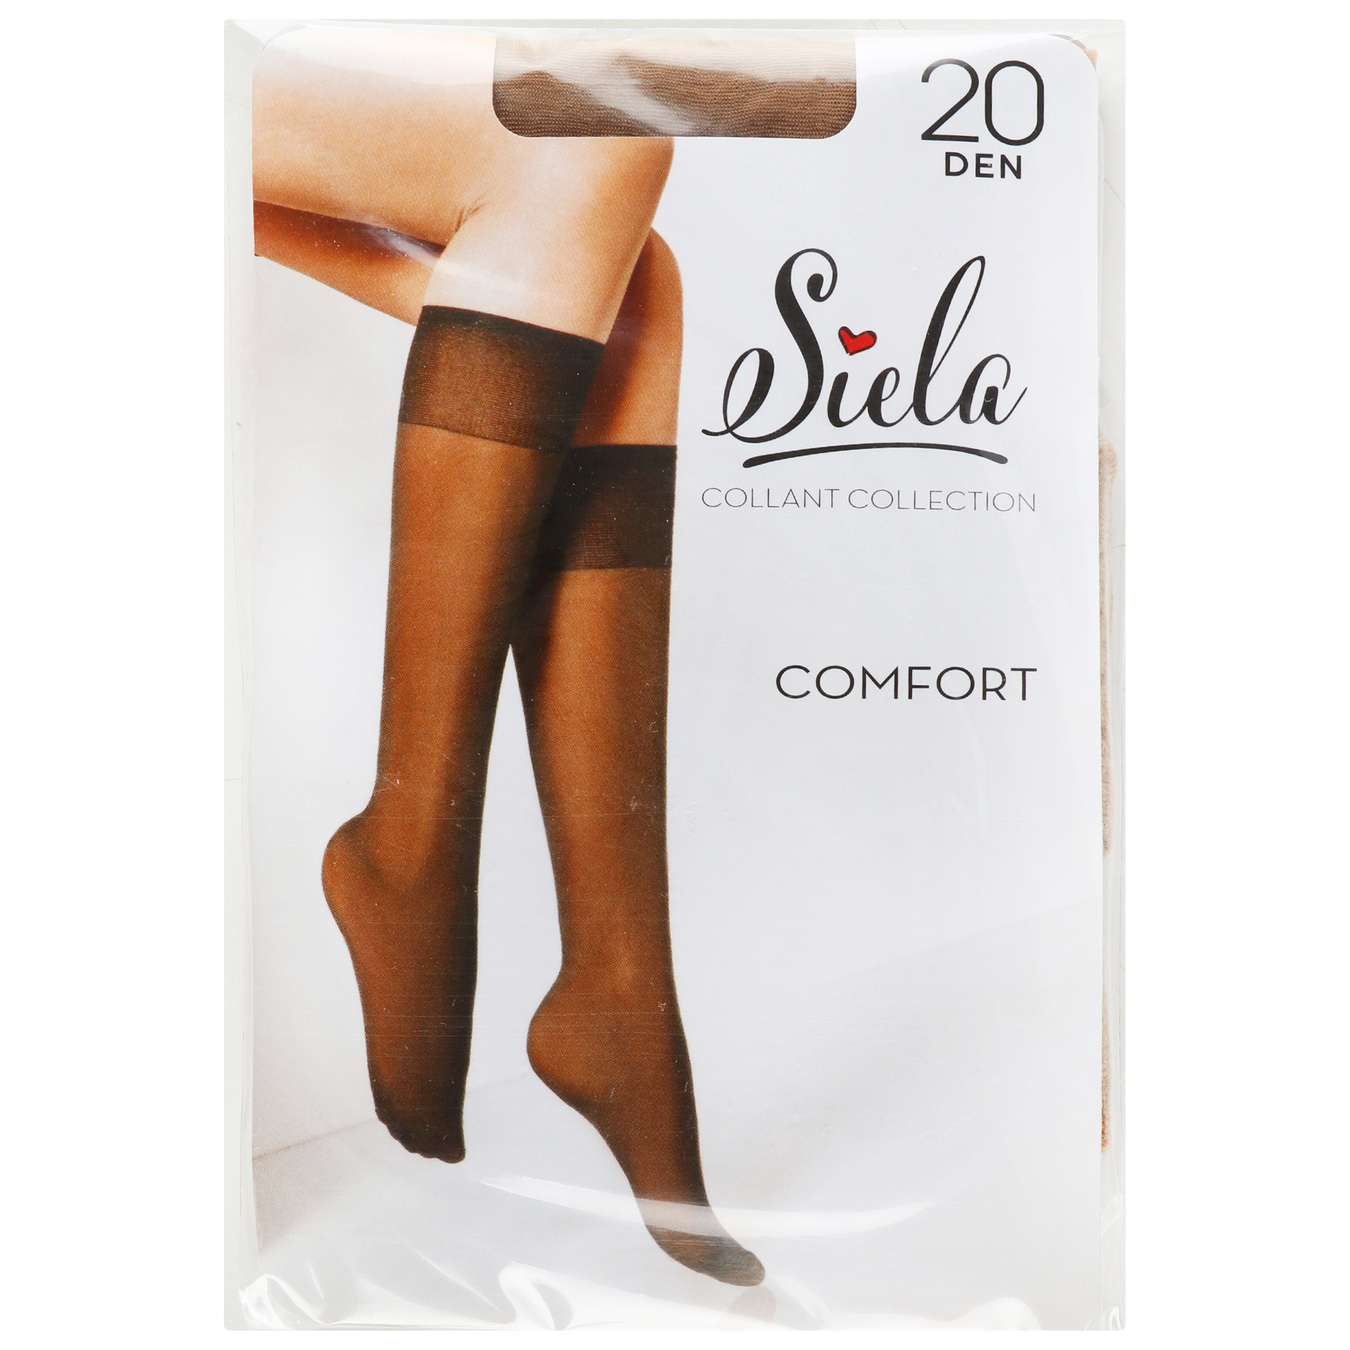 Women's golf shoes Siela Comfort 20den daino size 36-40